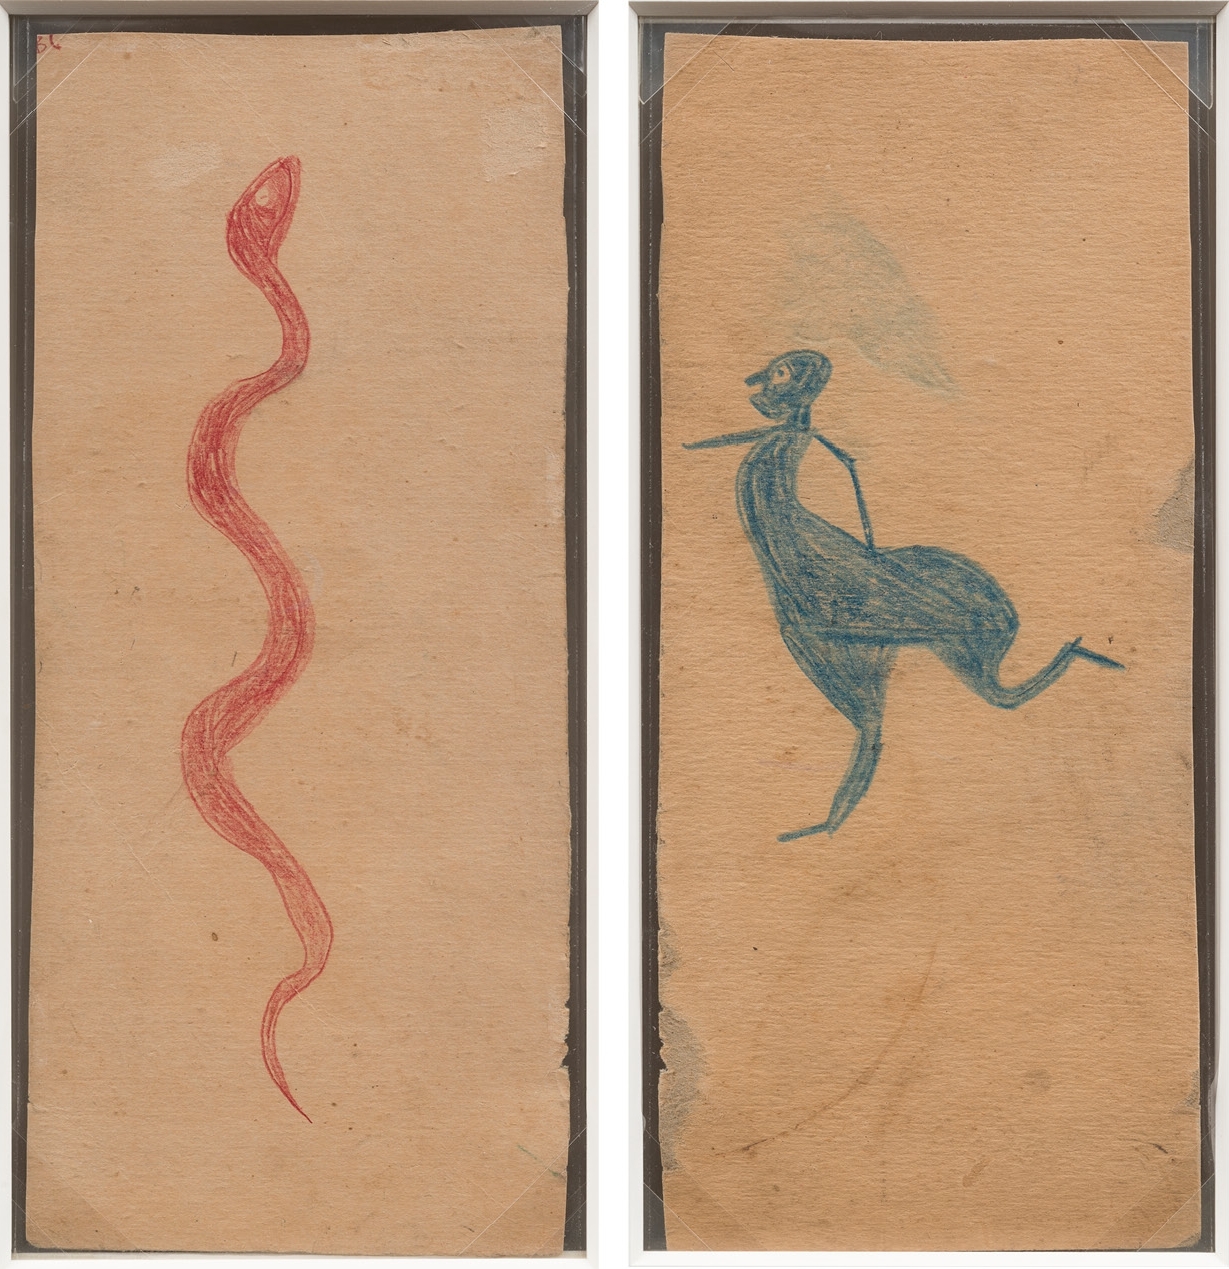 Bill Traylor,&nbsp;Red Snake/Blue Man, 1939&ndash;42;&nbsp;colored pencil on cardboard,&nbsp;10 3/4h x 4 3/4w in/&nbsp;27.31h x 12.07w cm

Inquire